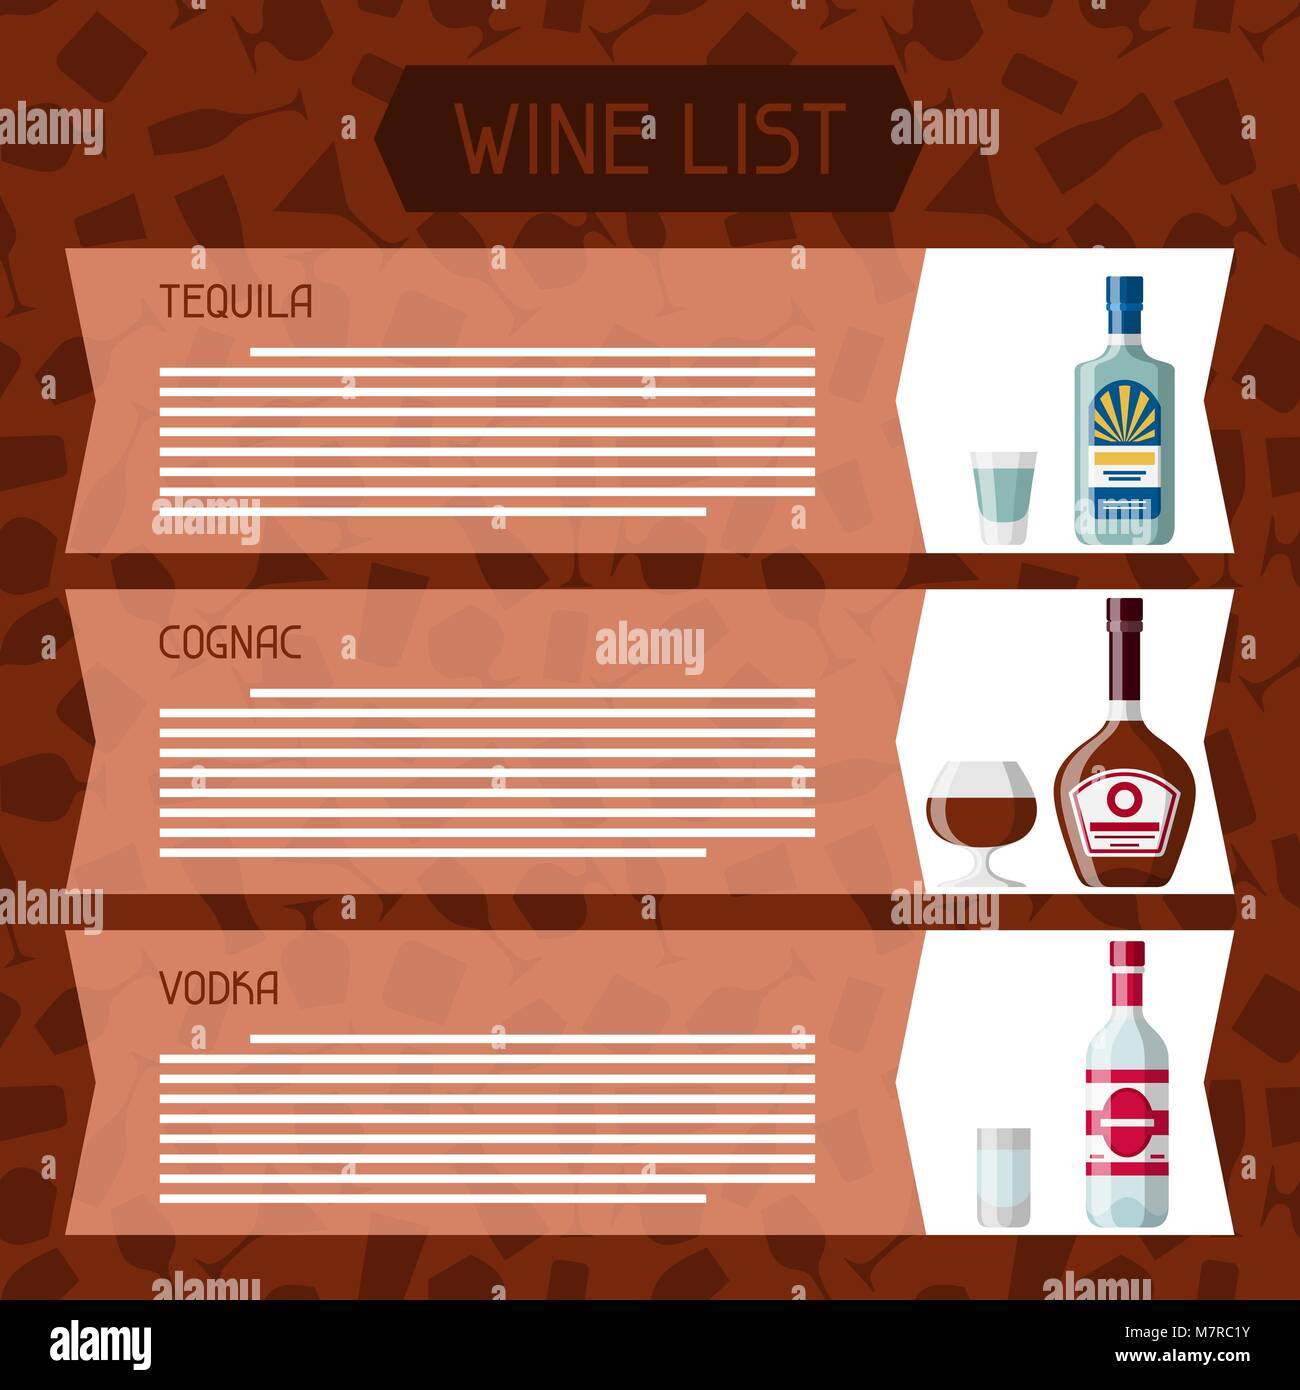 Alcohol drinks menu or wine list. Bottles, glasses for restaurants and bars Stock Vector